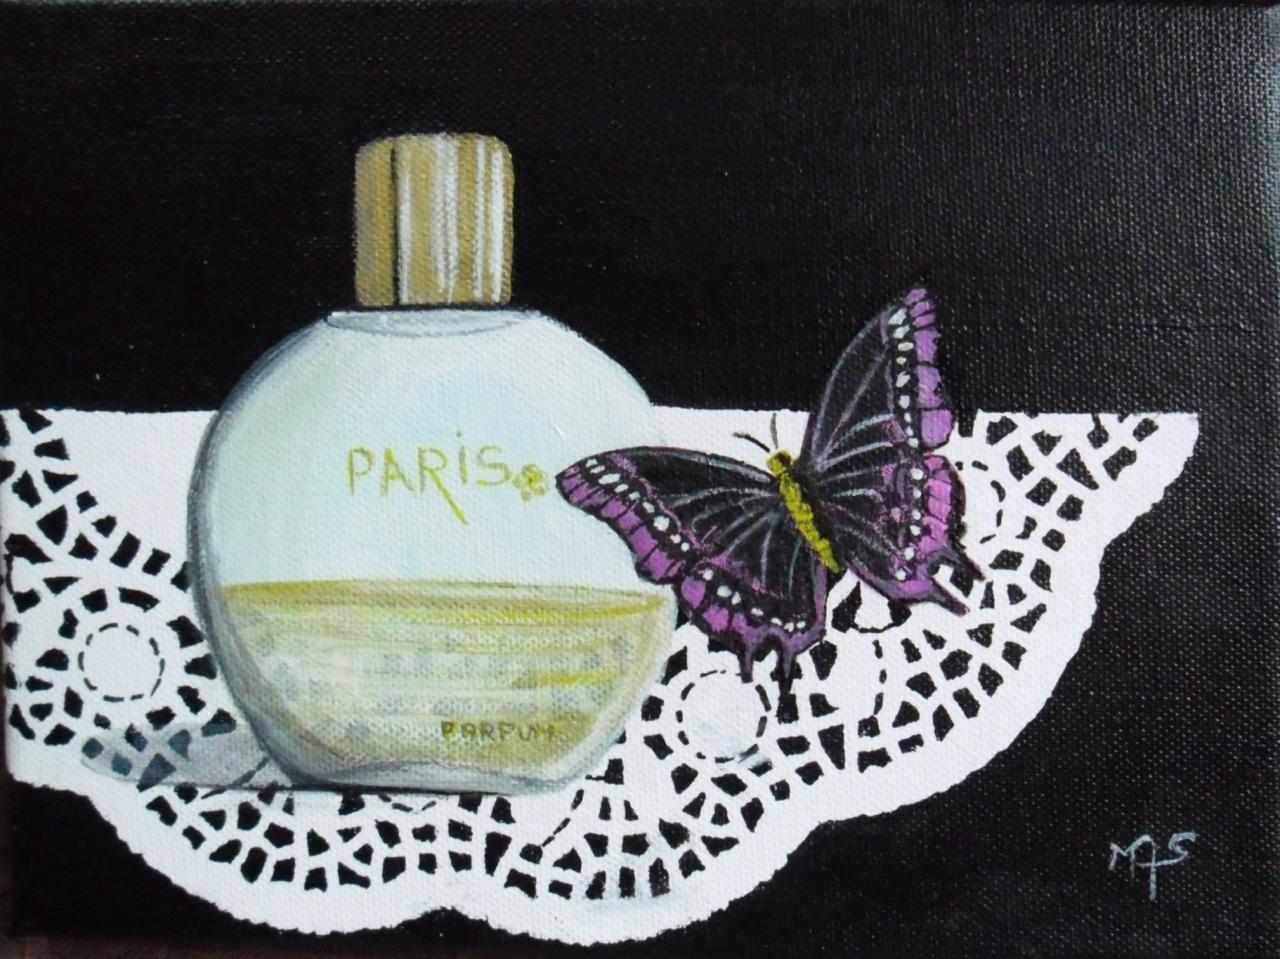 Parfum de Paris